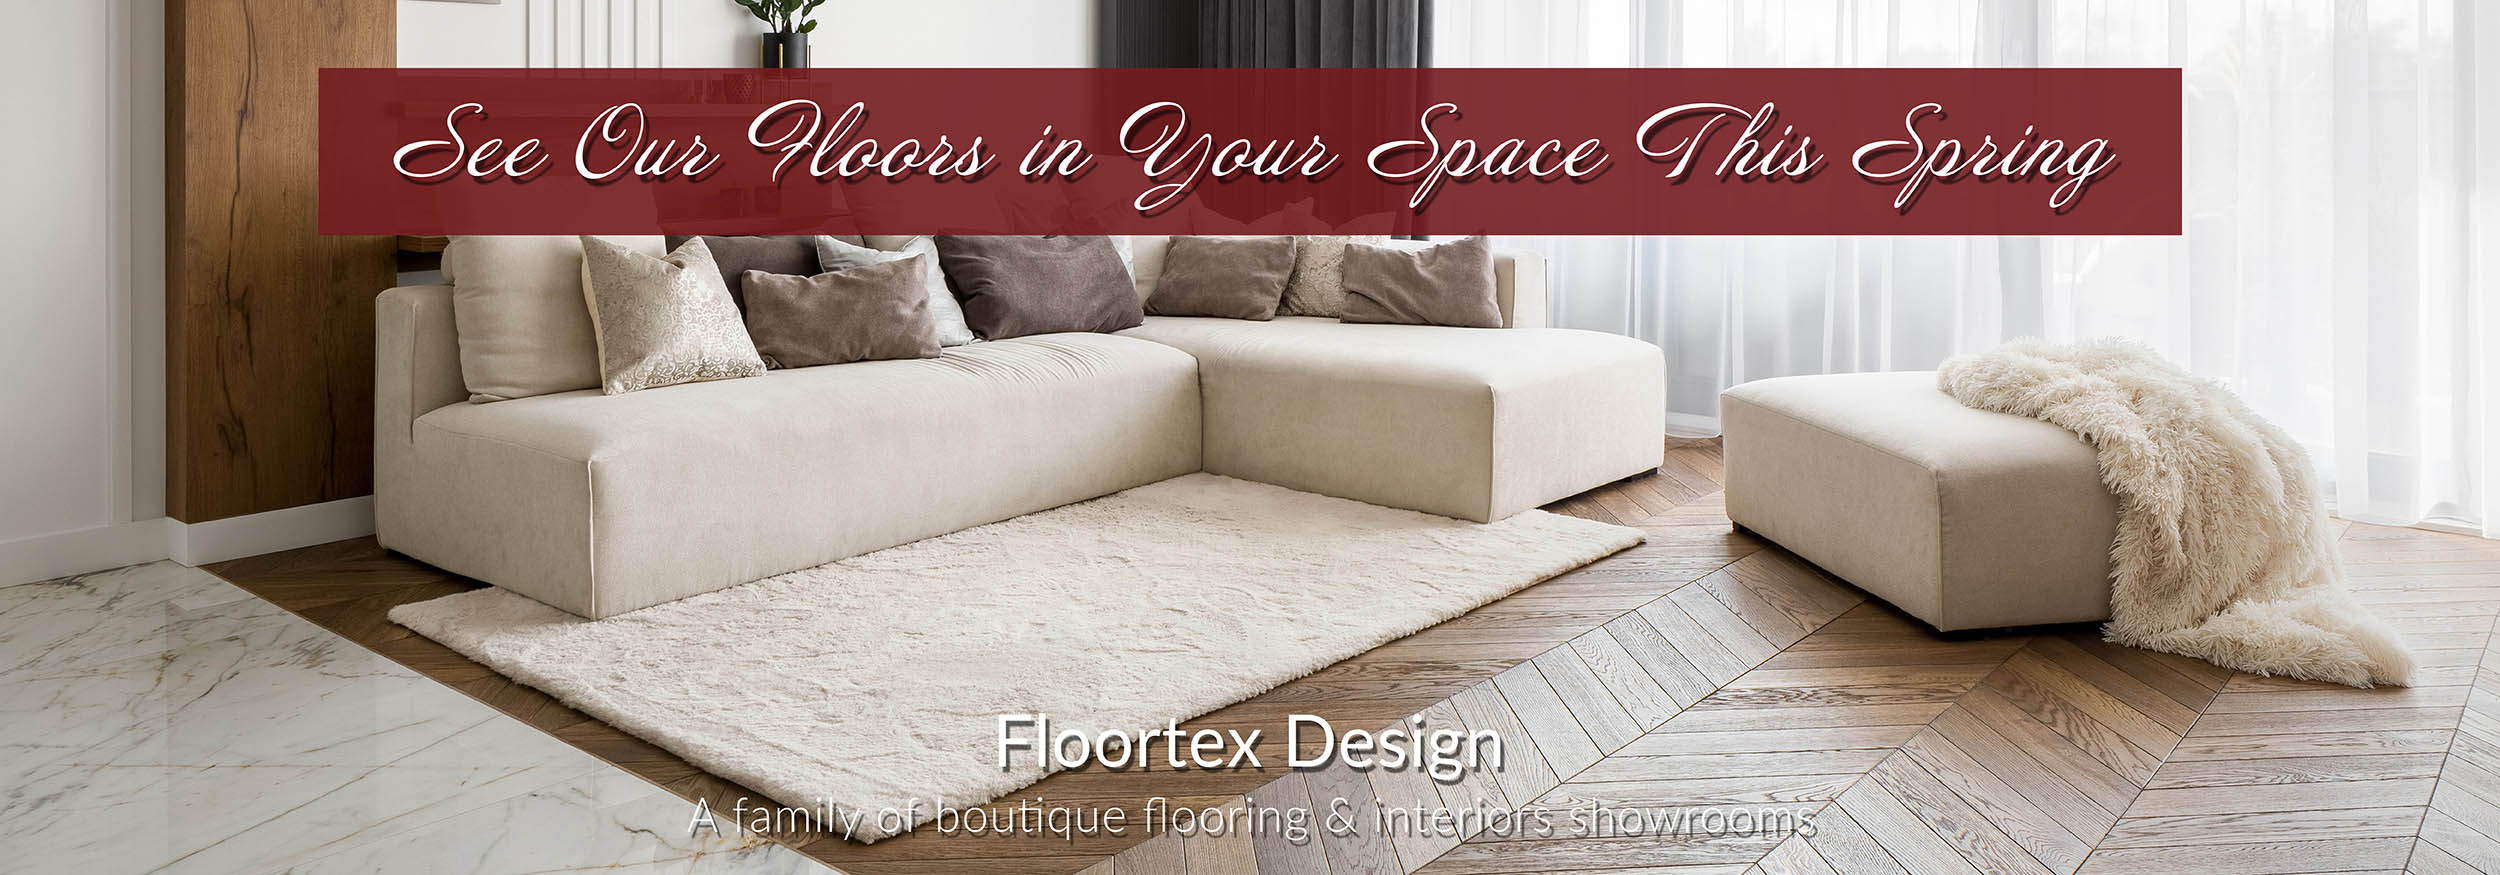 Floortex Design, Floortex Design